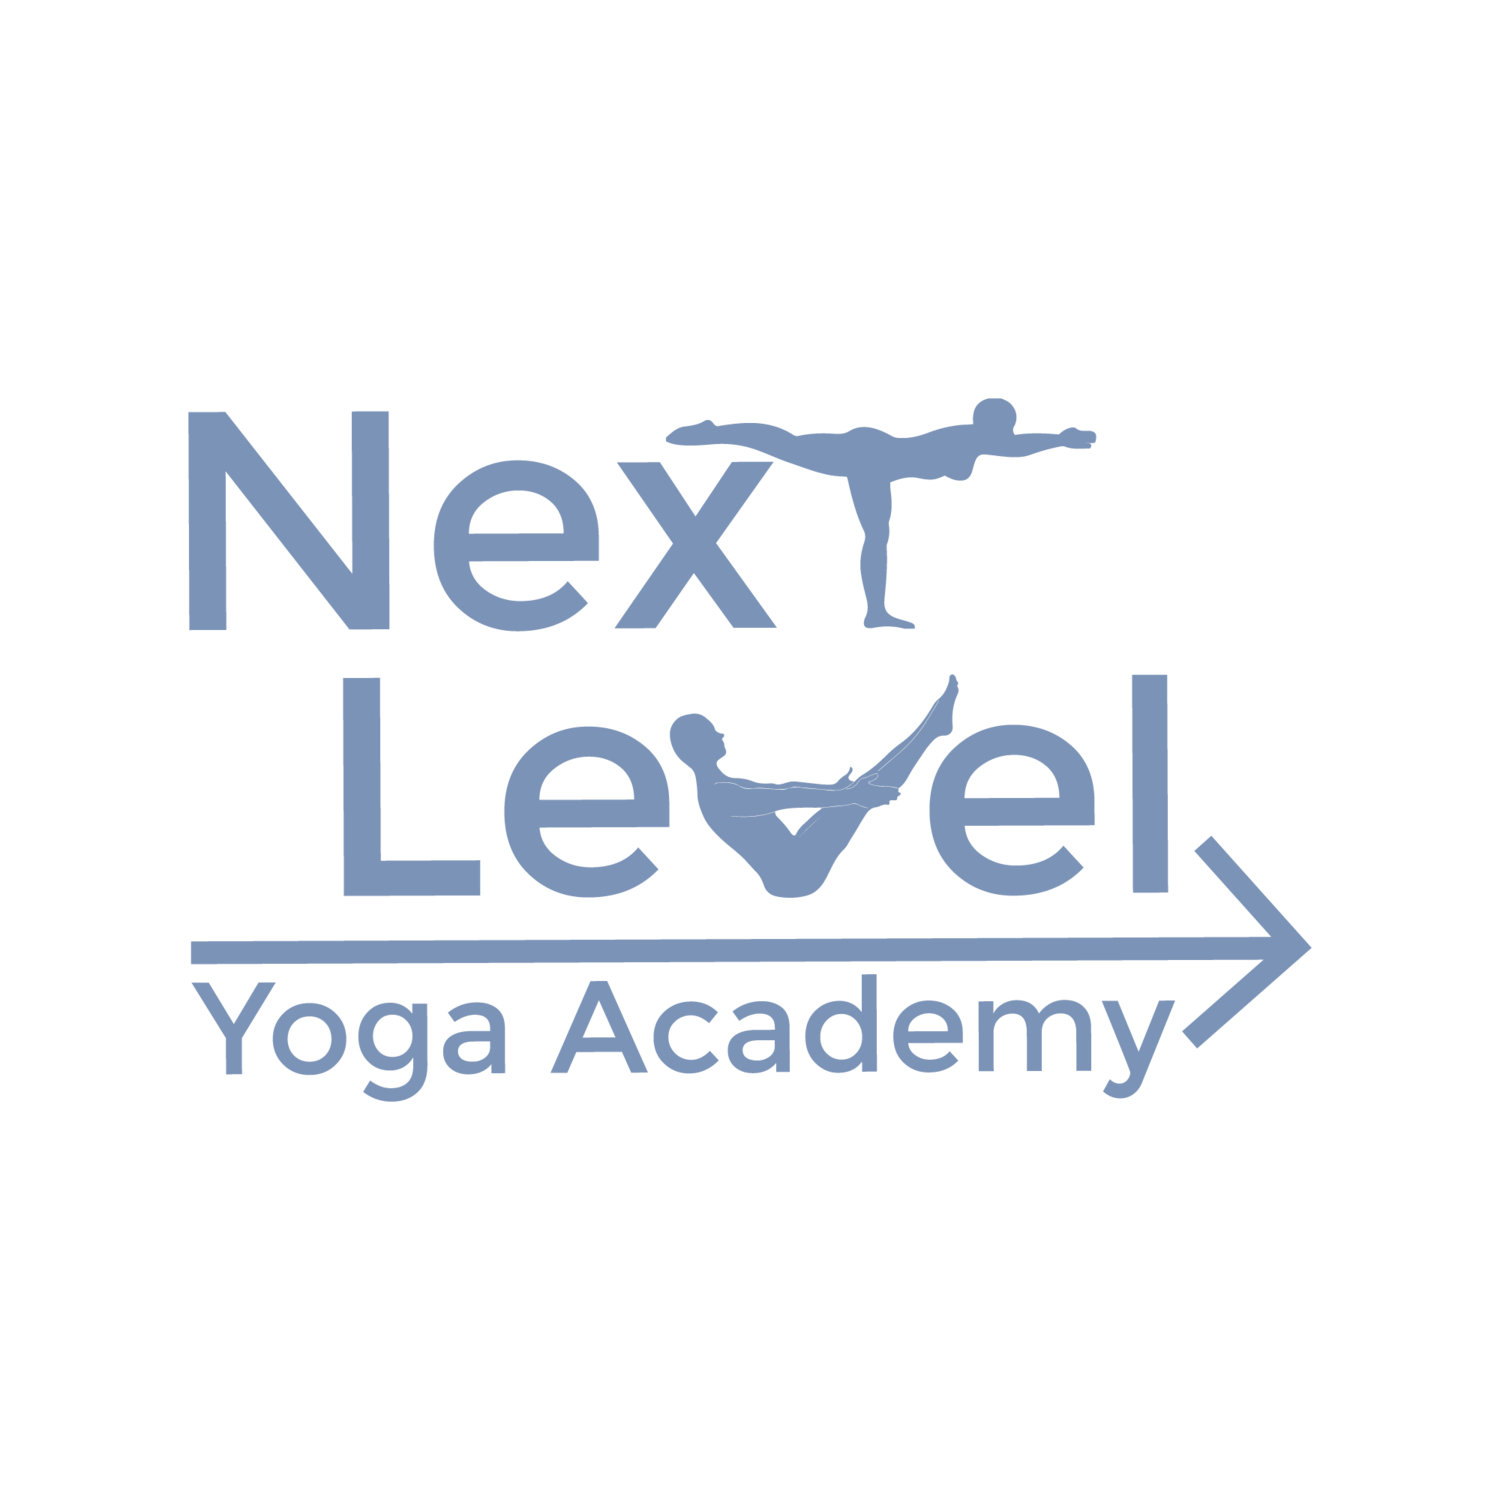 Next Level Yoga Academy